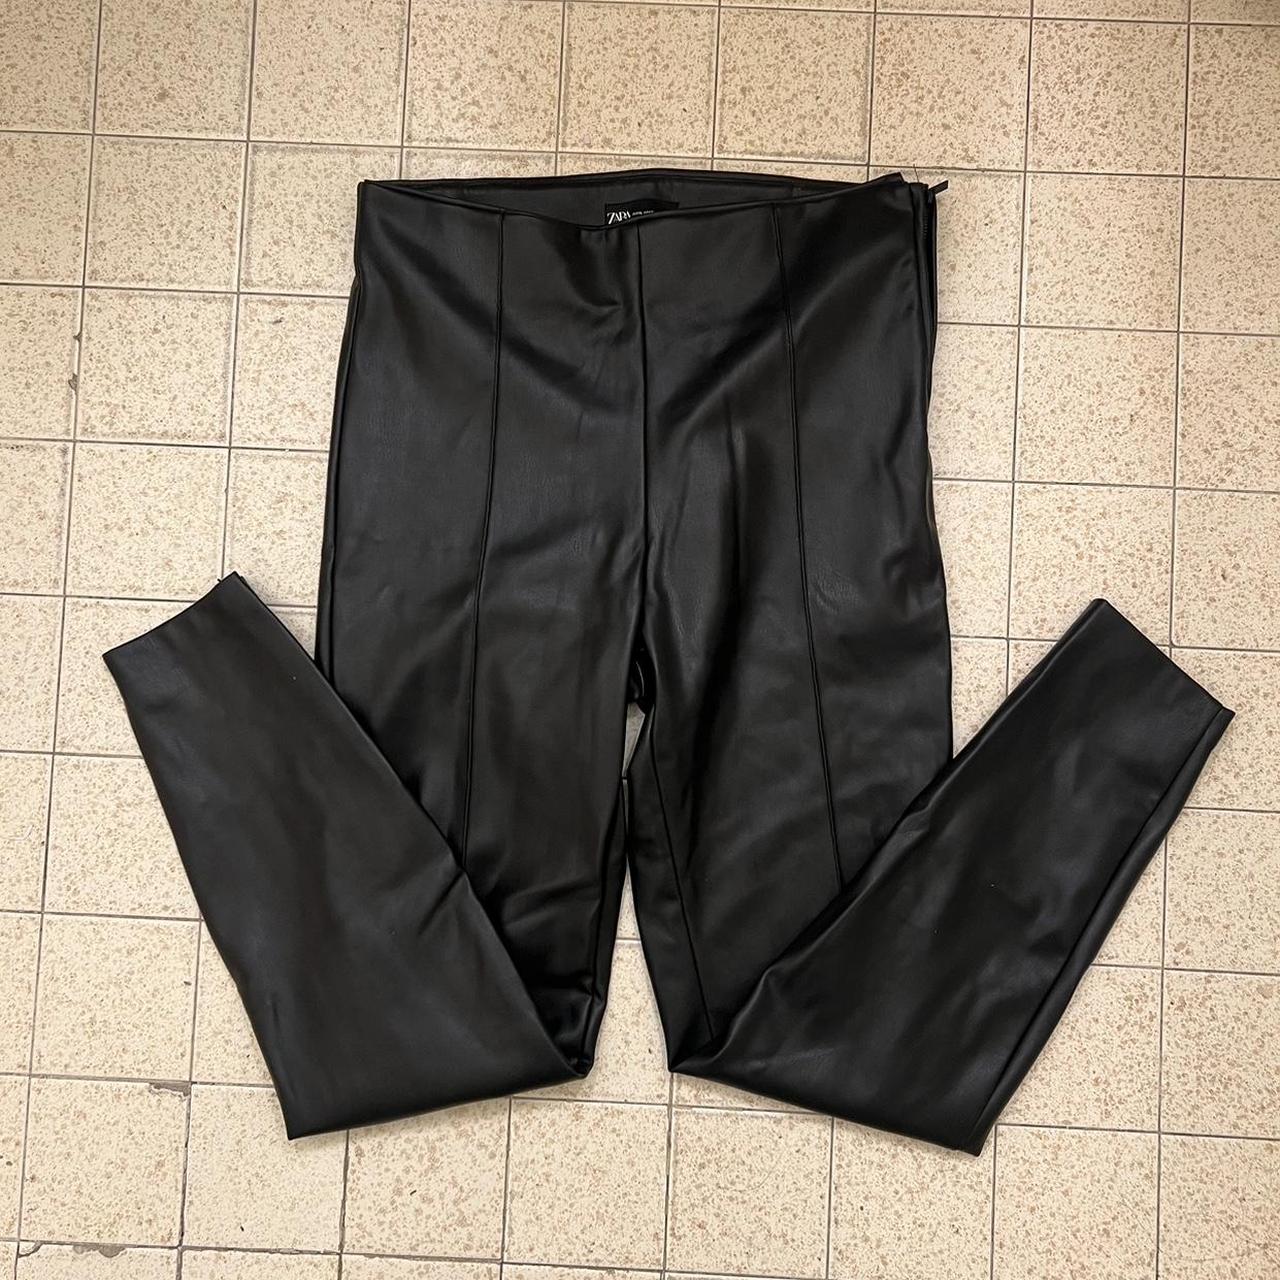 ZARA fake leather pants best fits L/XL - Depop